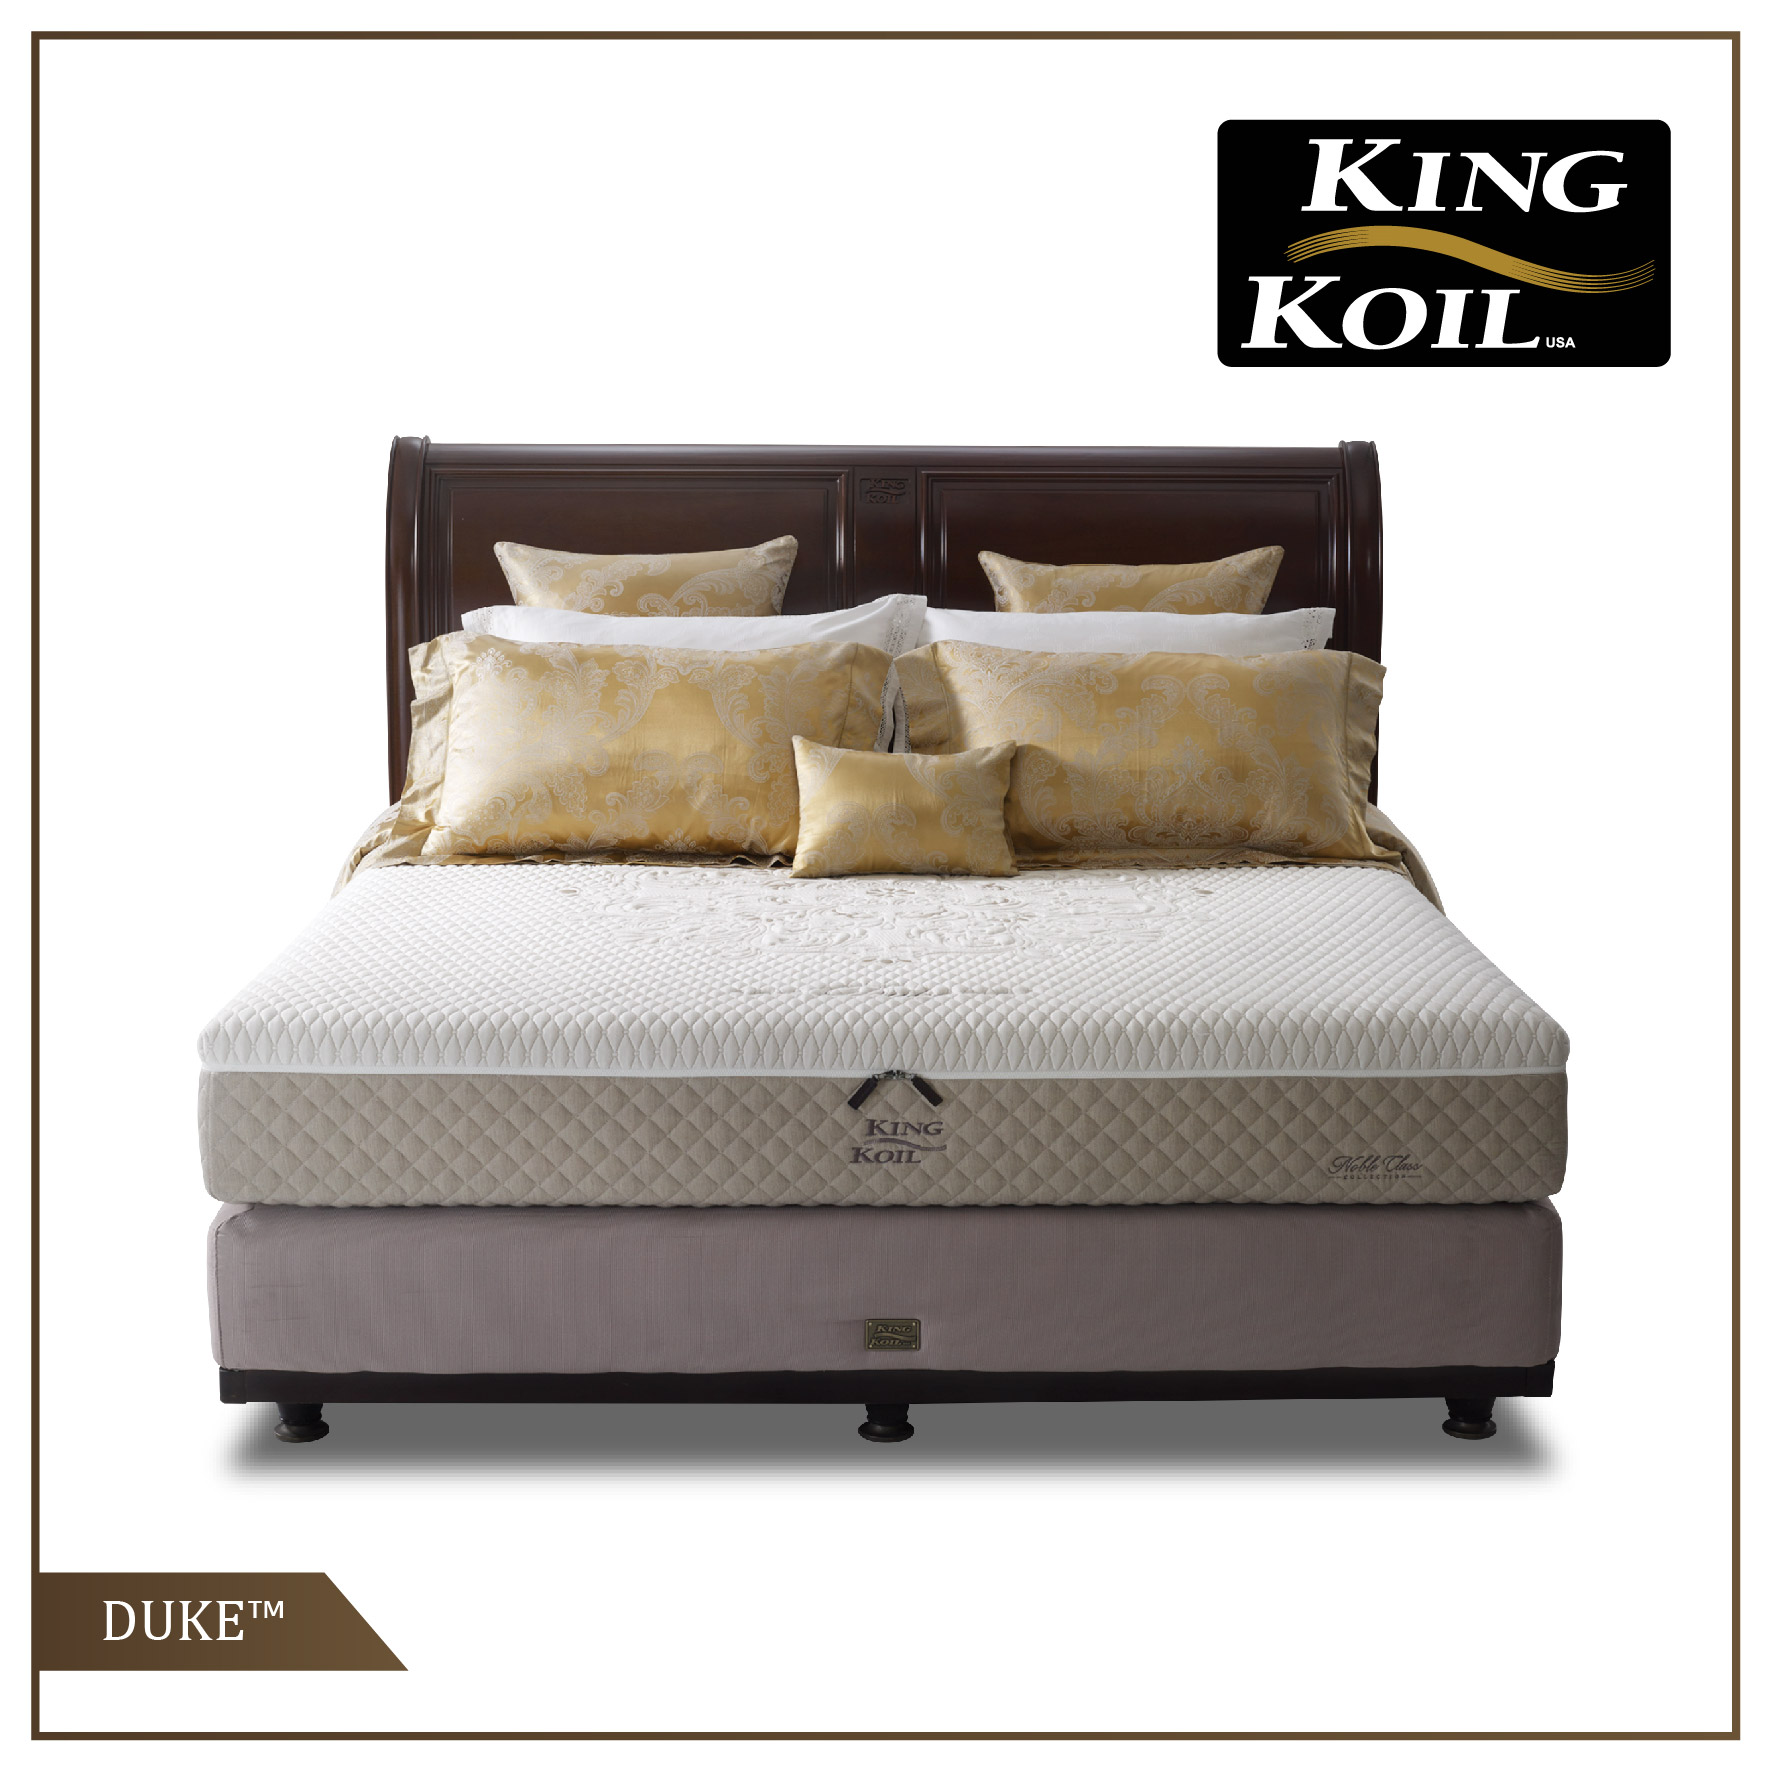 King Koil Latex Bed Duke - Mattress Only